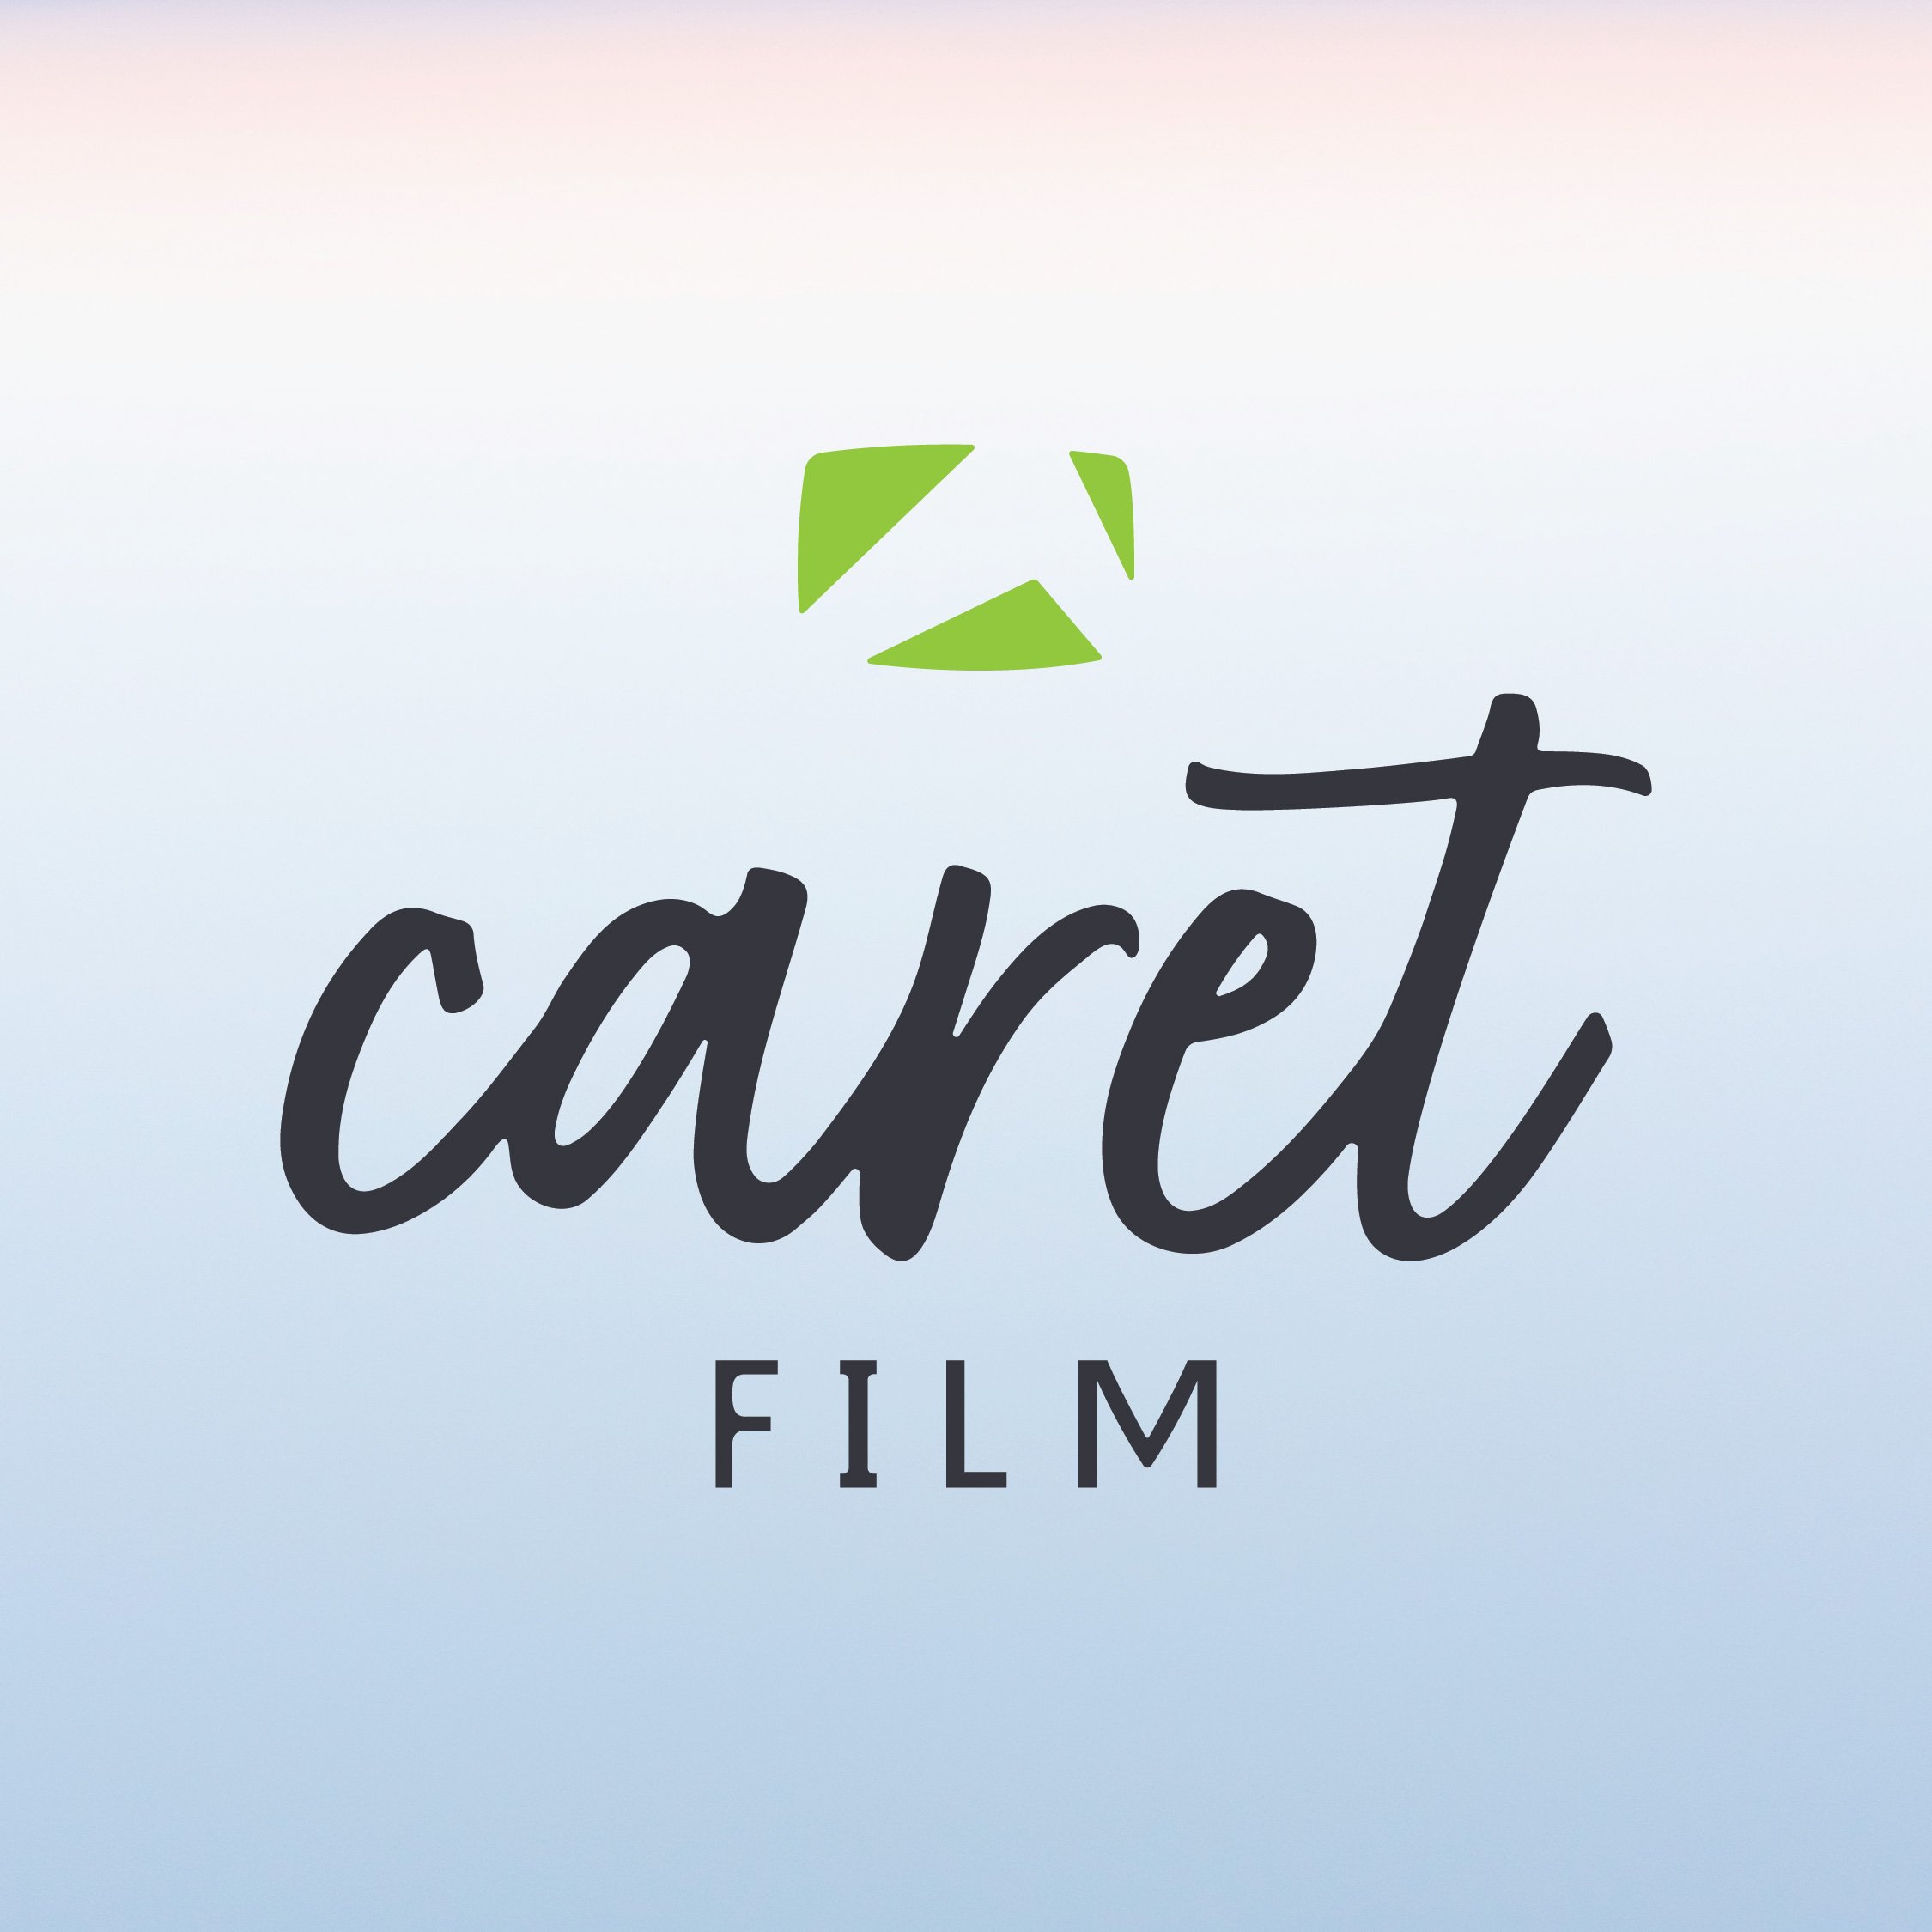 Caret Film — Piney Colors